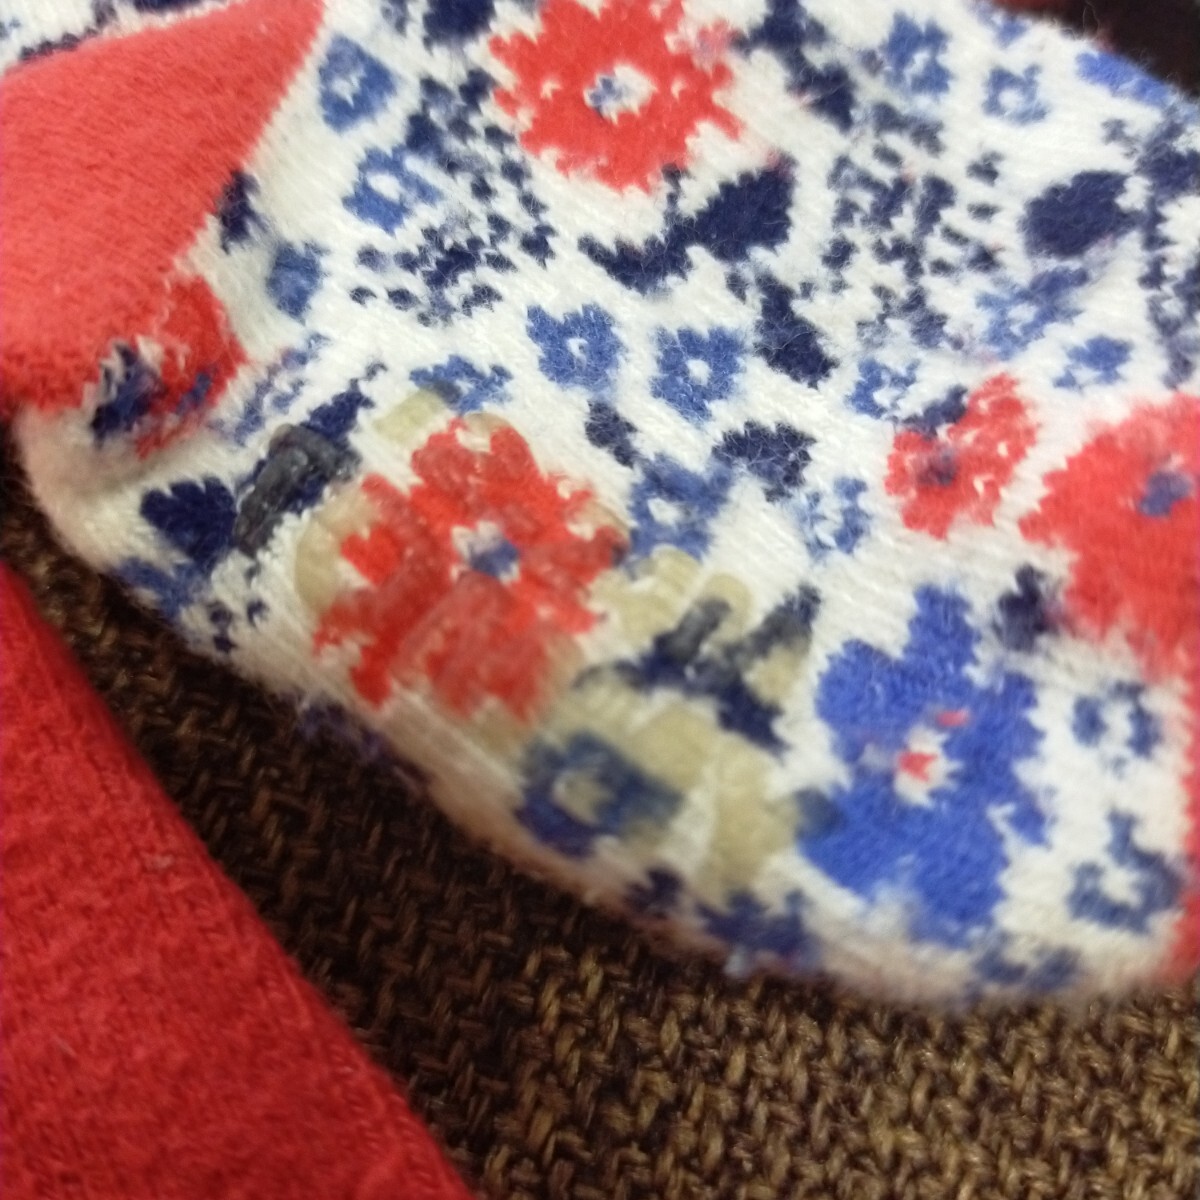 TOMMY HILFIGER Tommy Hilfiger tomi Hill baby socks baby socks floral print red socks 